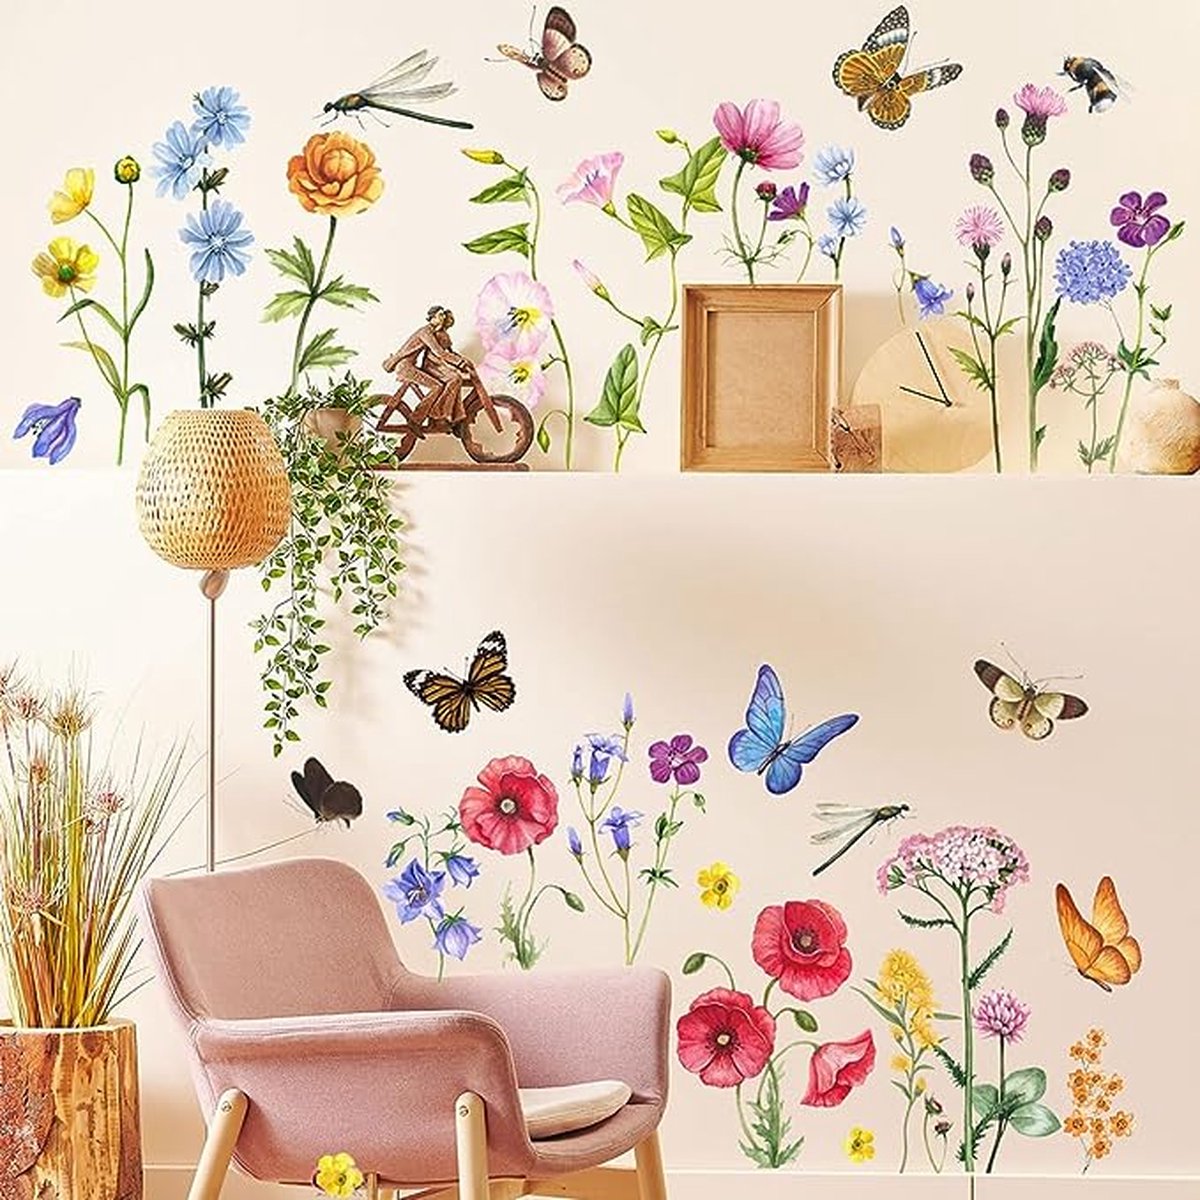 Sticker mural avec branche, fleurs roses et papillons